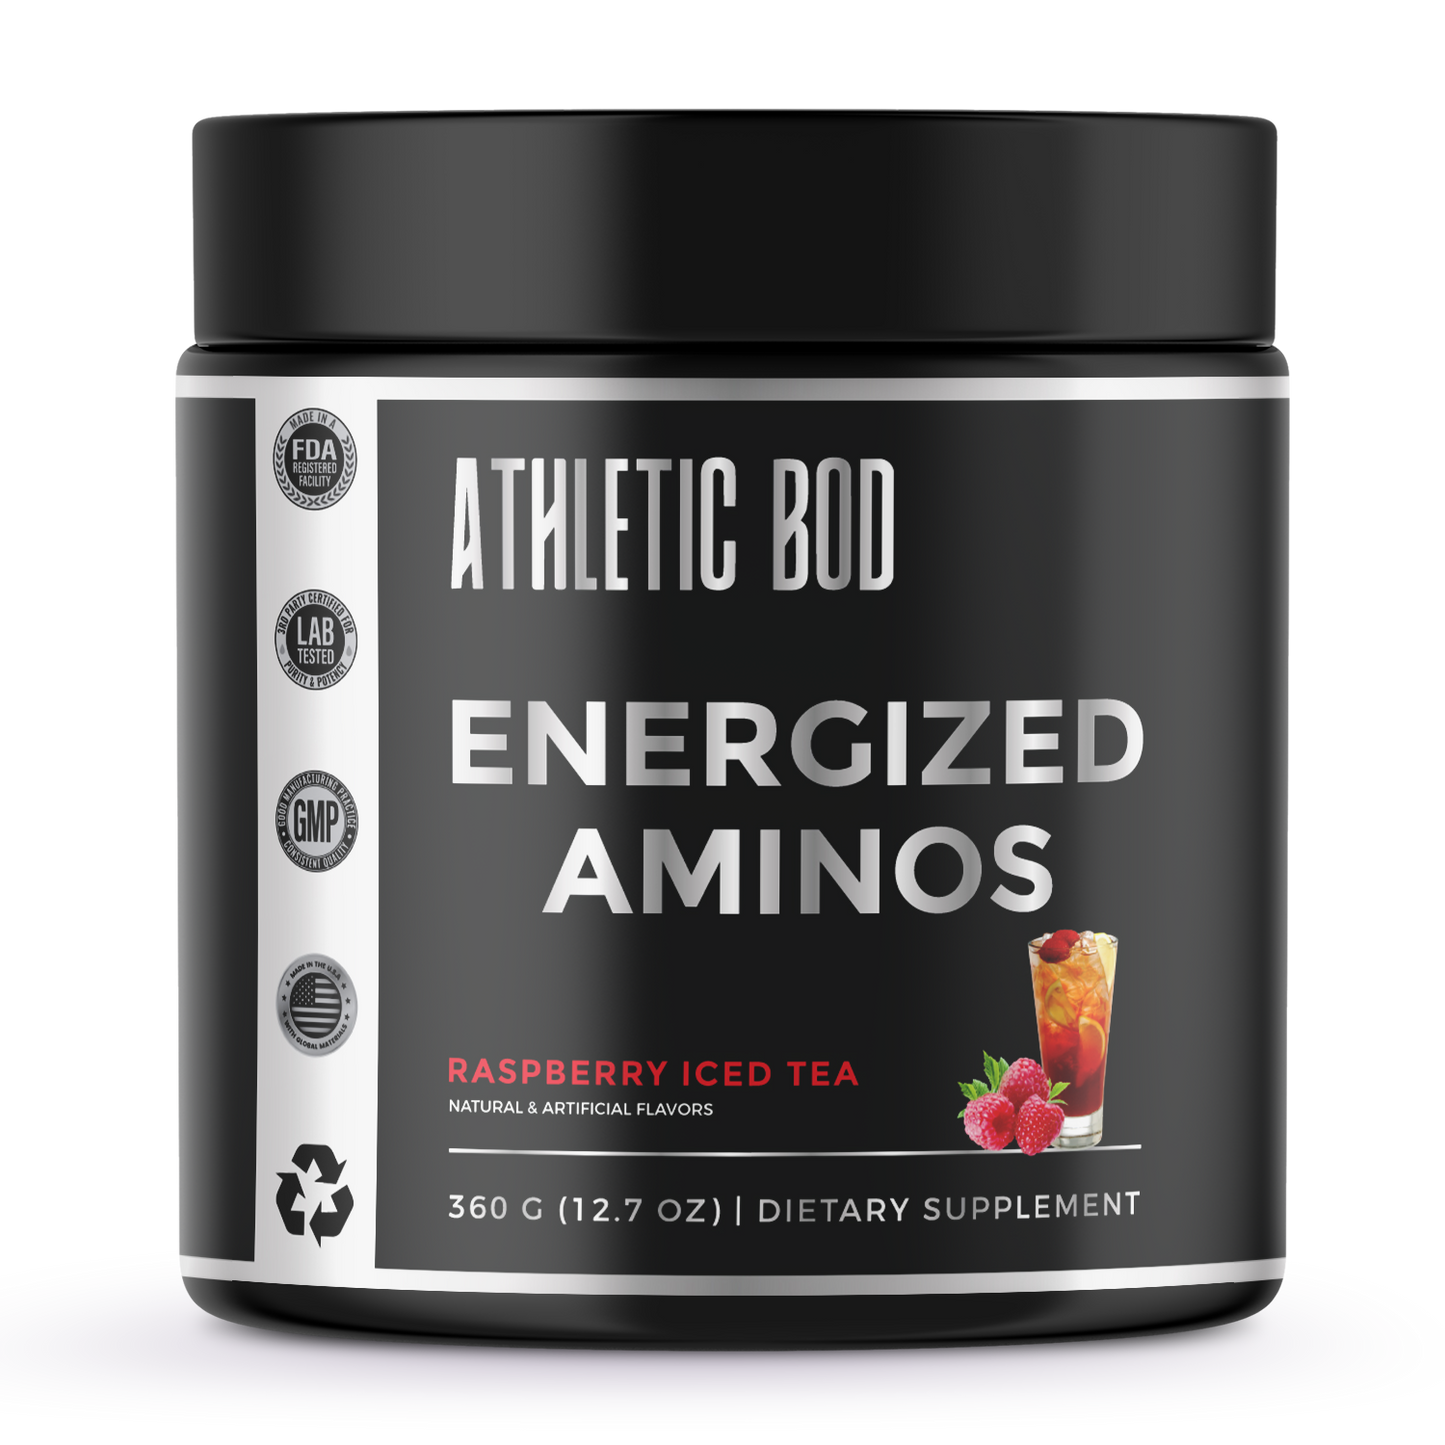 Energized Aminos Raspberry Iced Tea